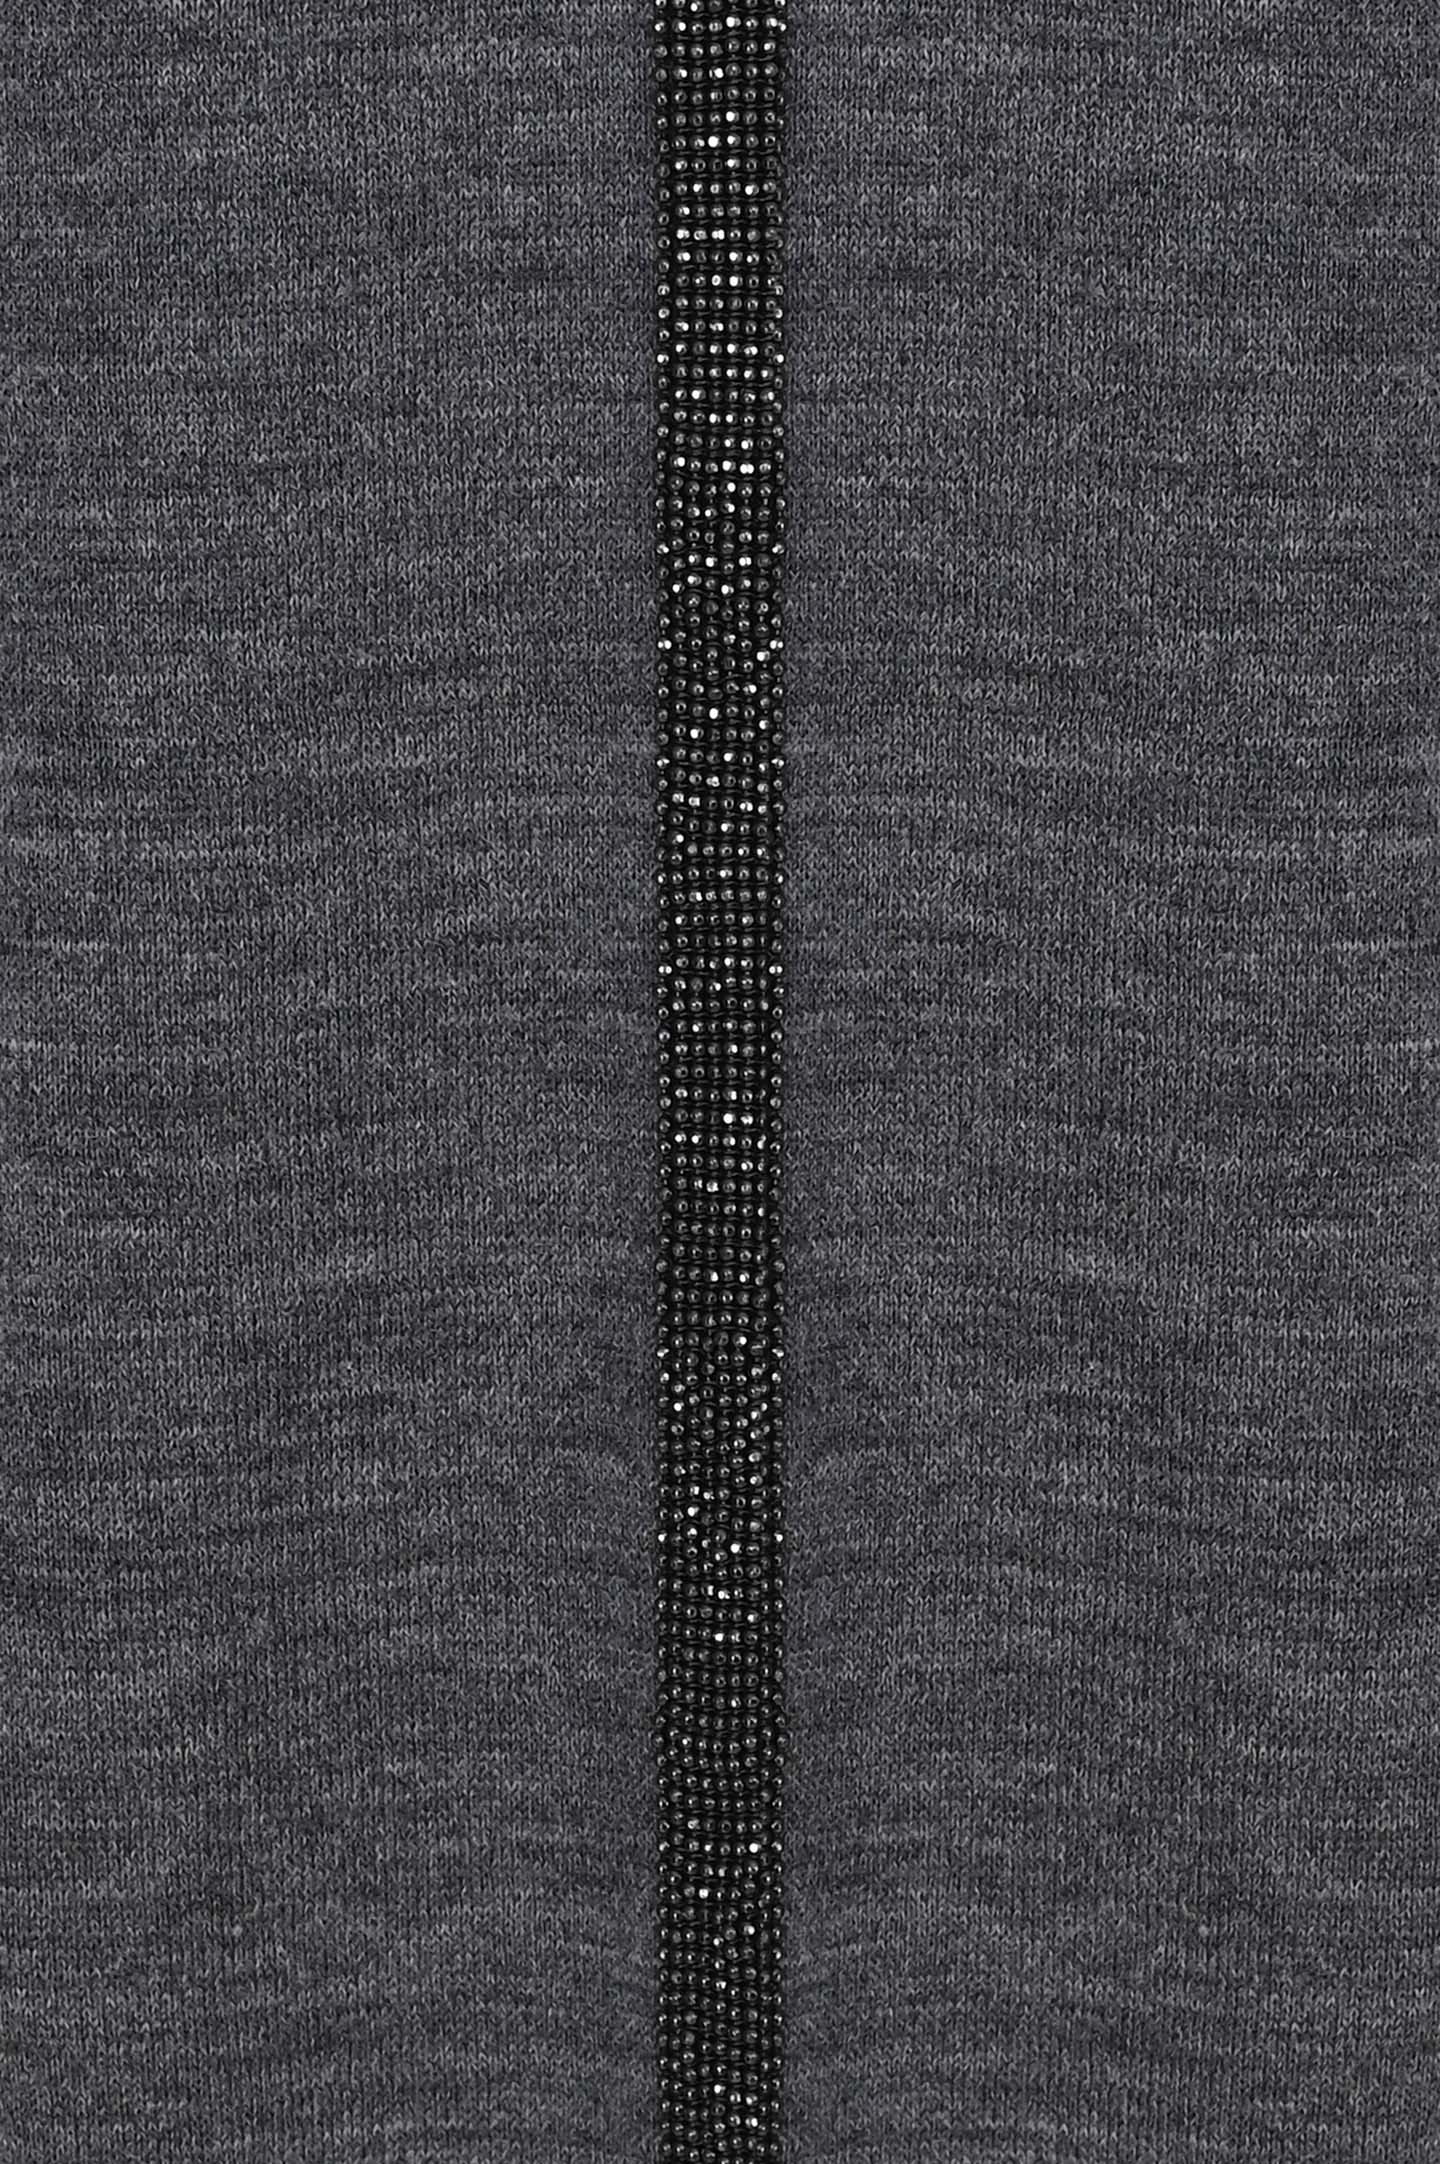 Куртка спорт BRUNELLO  CUCINELLI MP828SM606, цвет: Серый, Женский